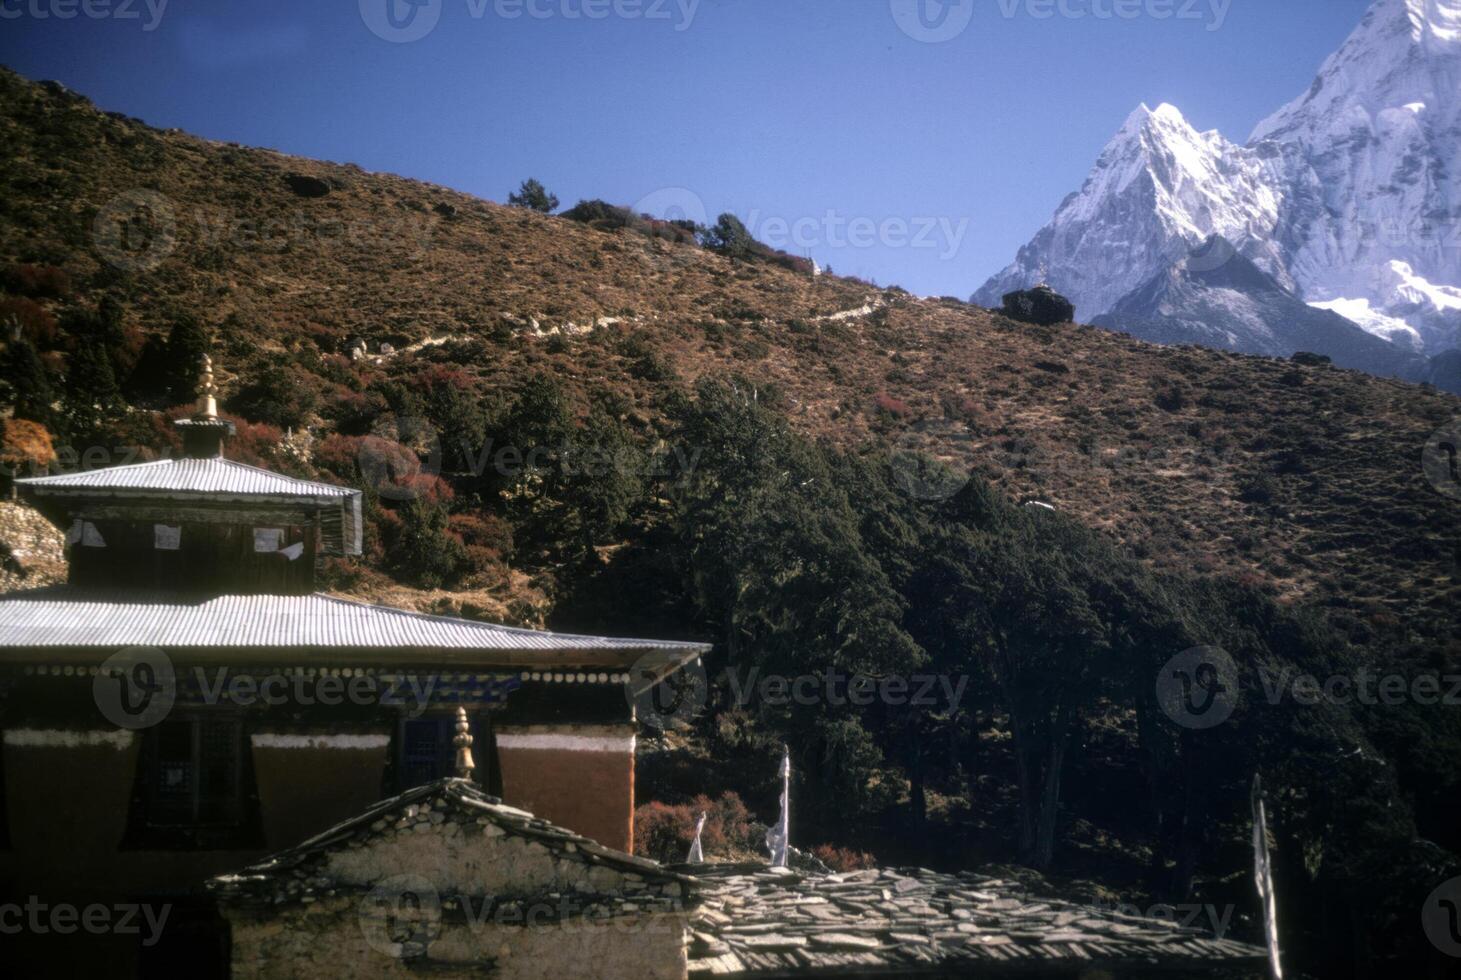 thyangboche monasterio y pico de ama dablam foto